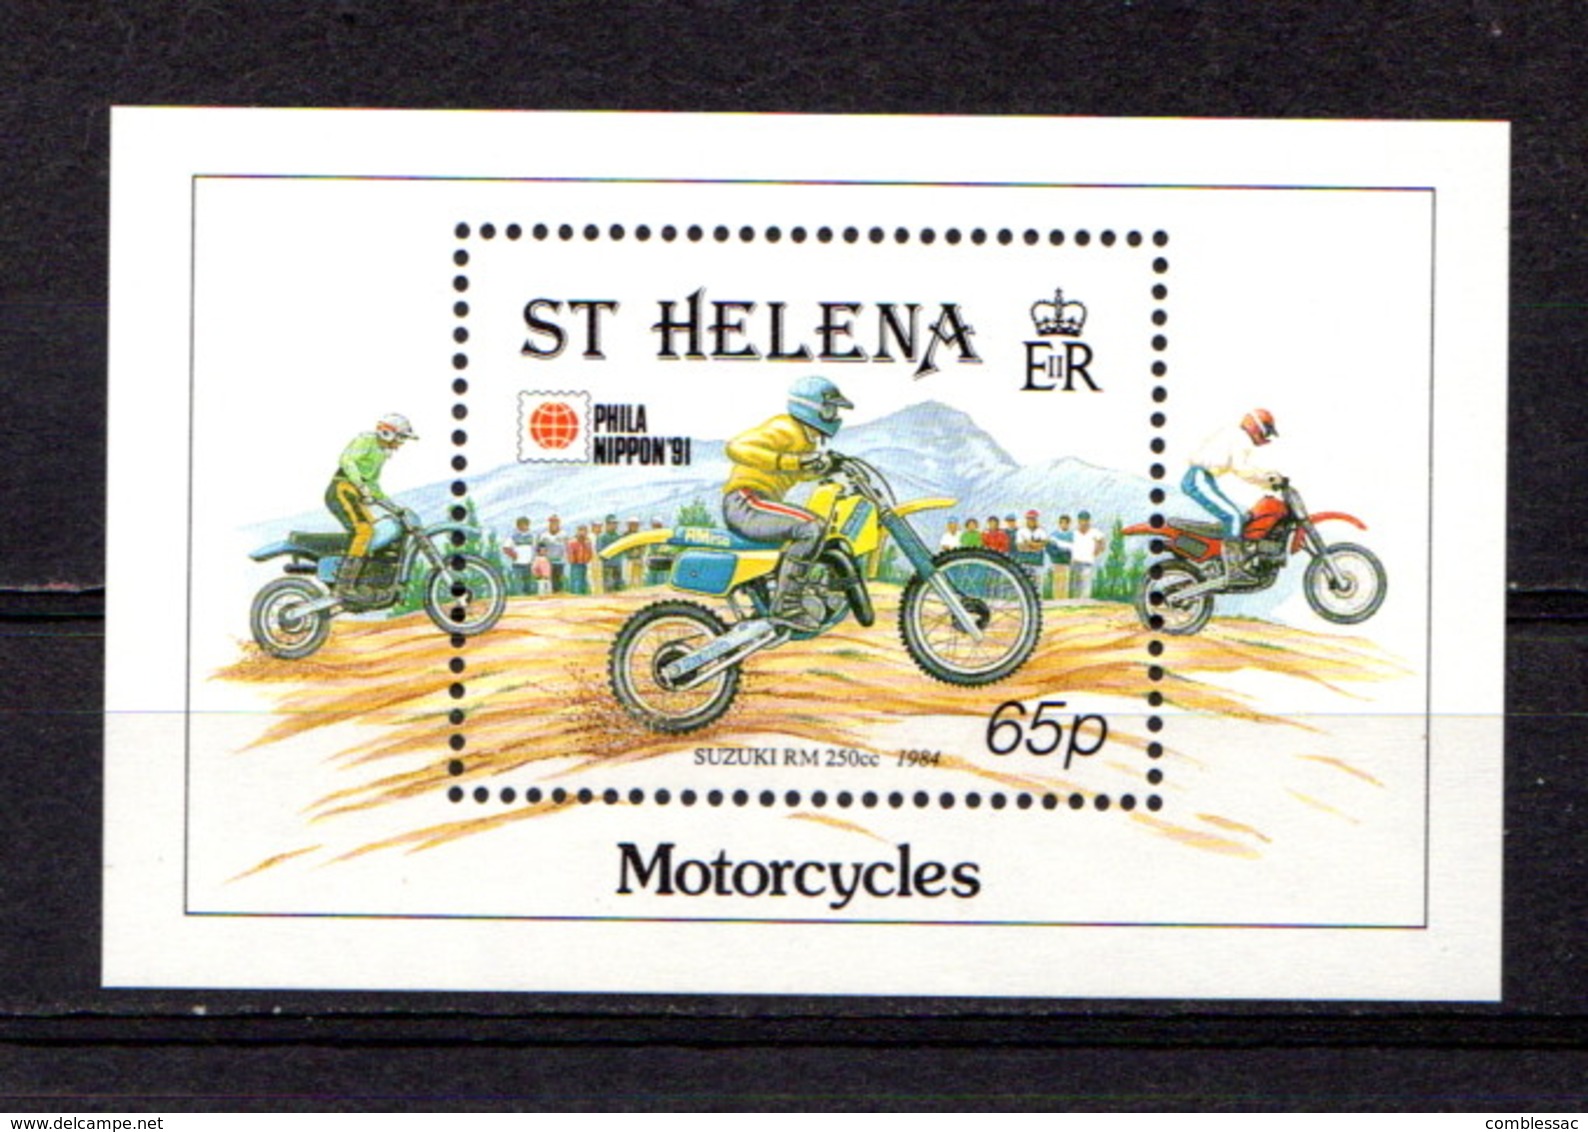 SAINT  HELENA    1991    Philanippon  International  Stamp  Exhibition   Sheetlet    MNH - Isola Di Sant'Elena